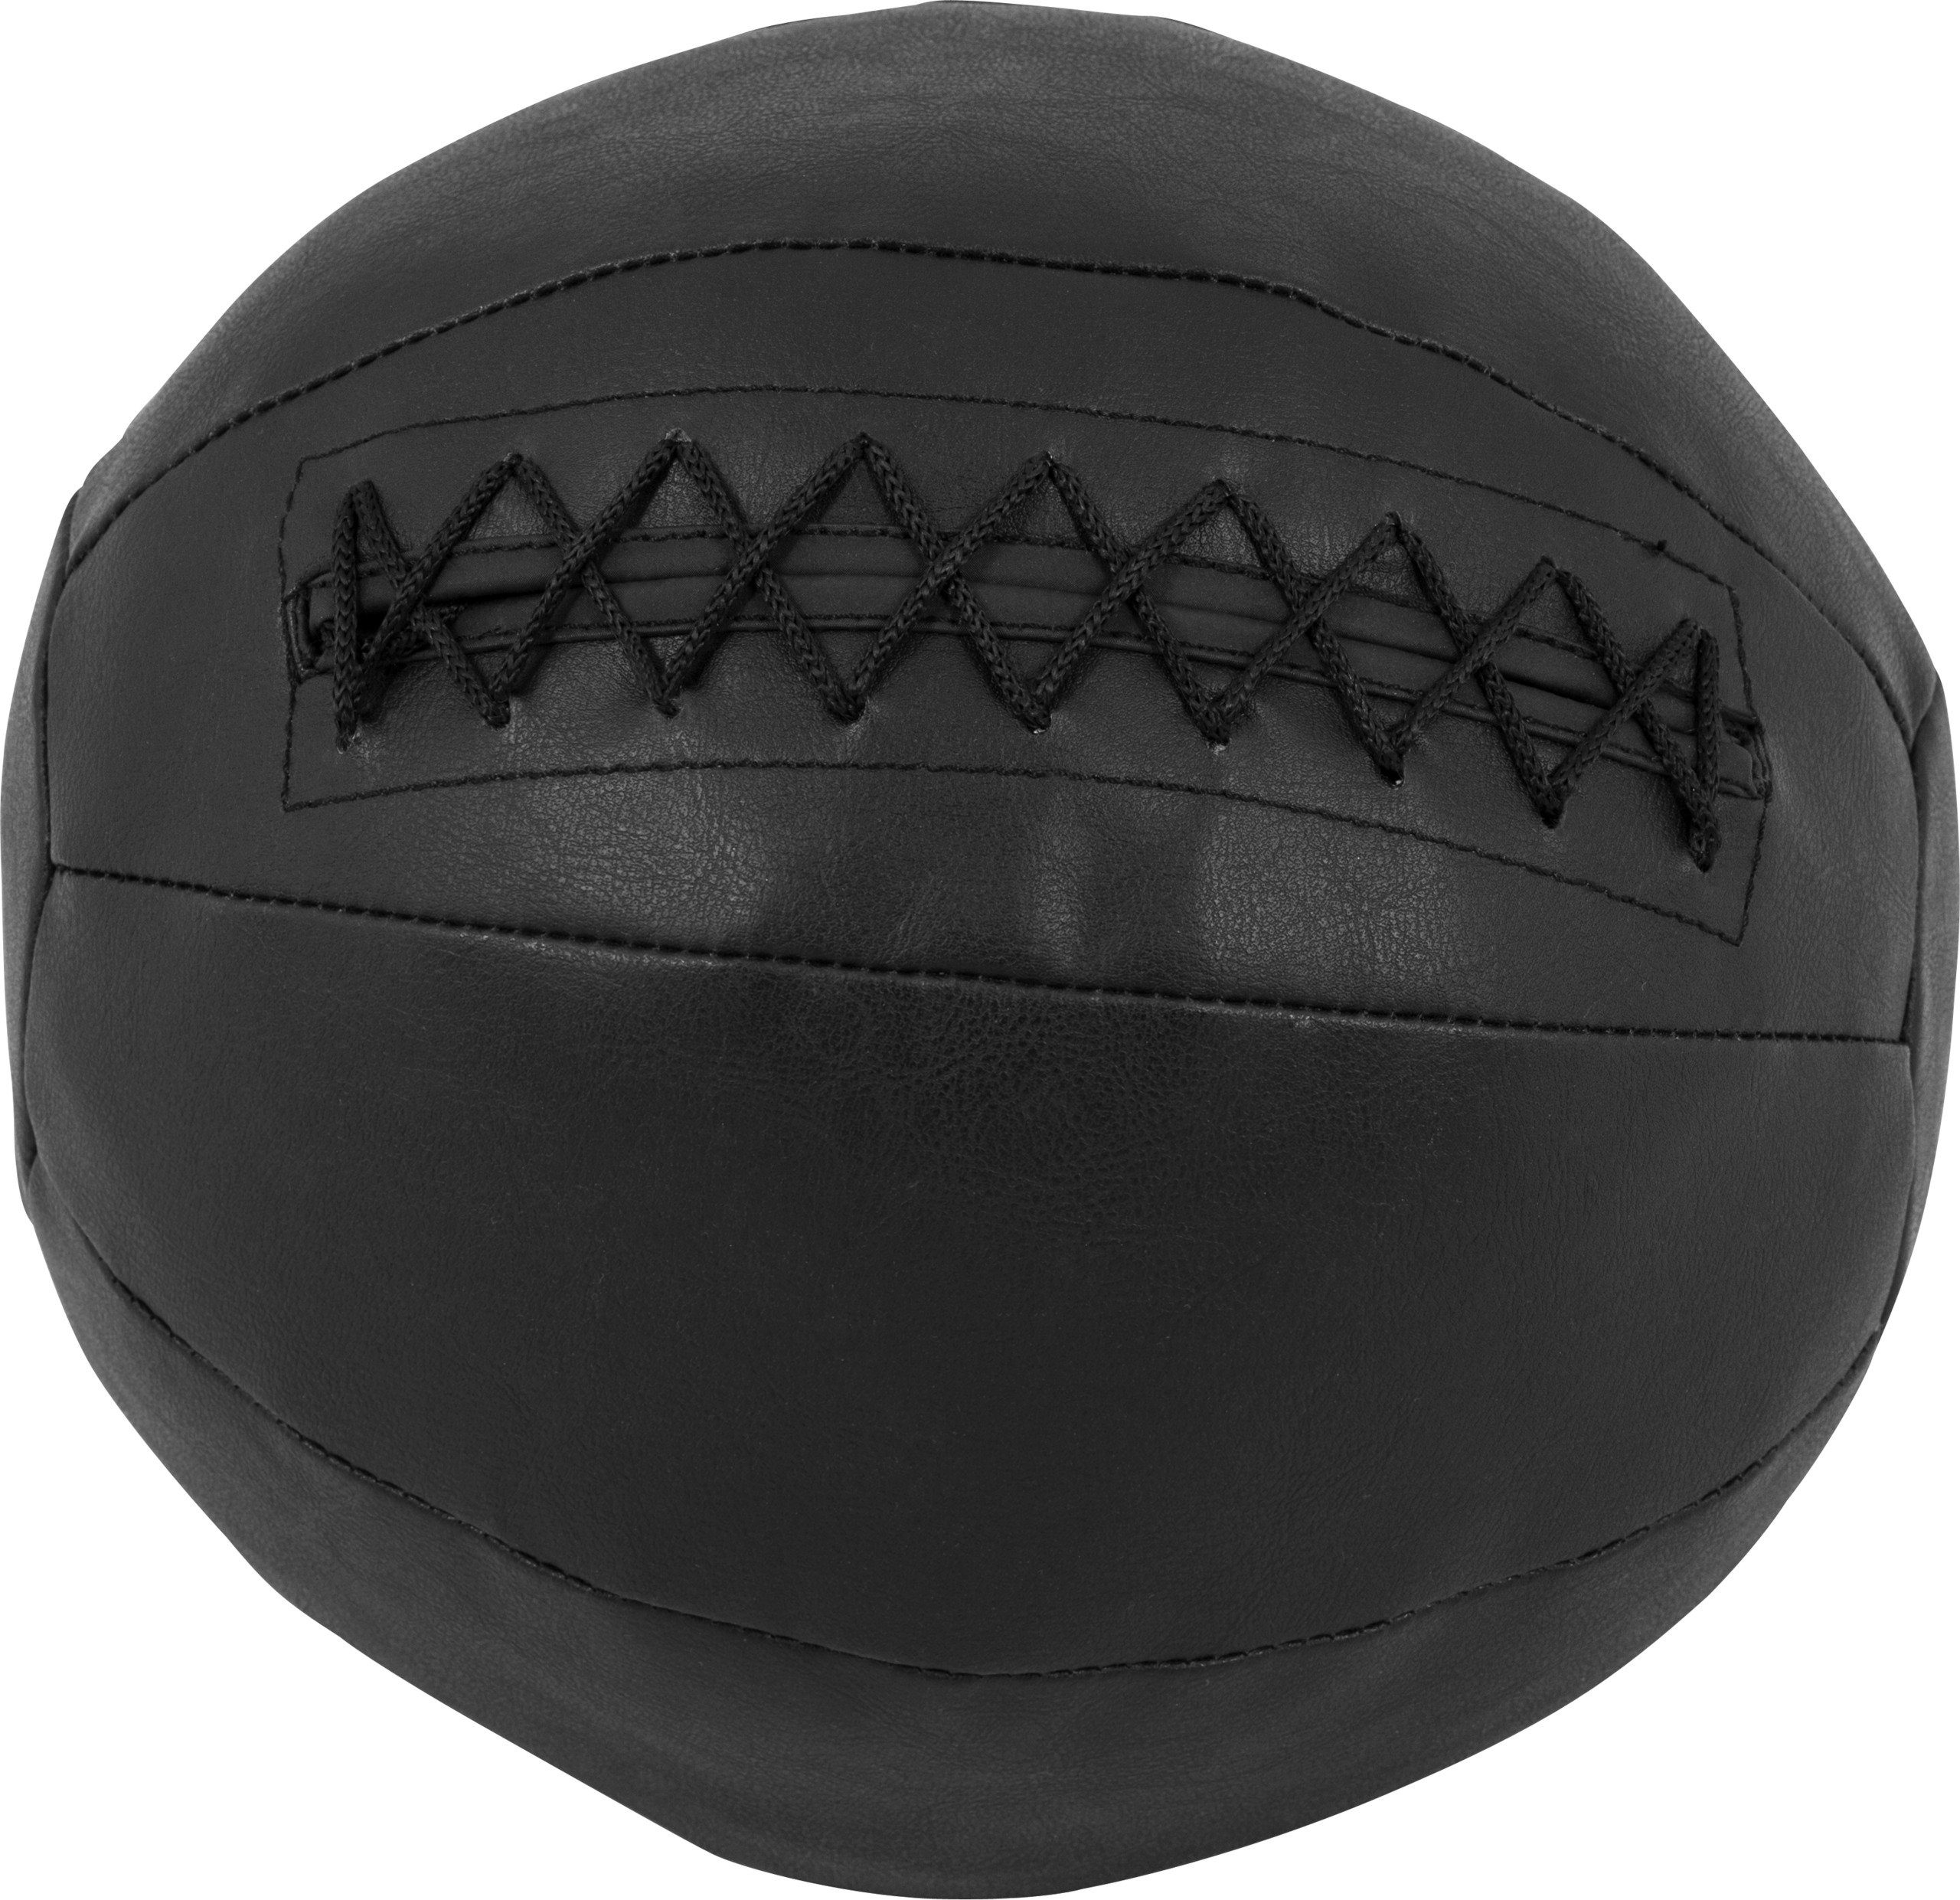 SPORTS kg Leder, Gewichtsball GORILLA Trainingsball, Einzeln/Set, Medizinball Fitnessball, 3 aus 29cm,